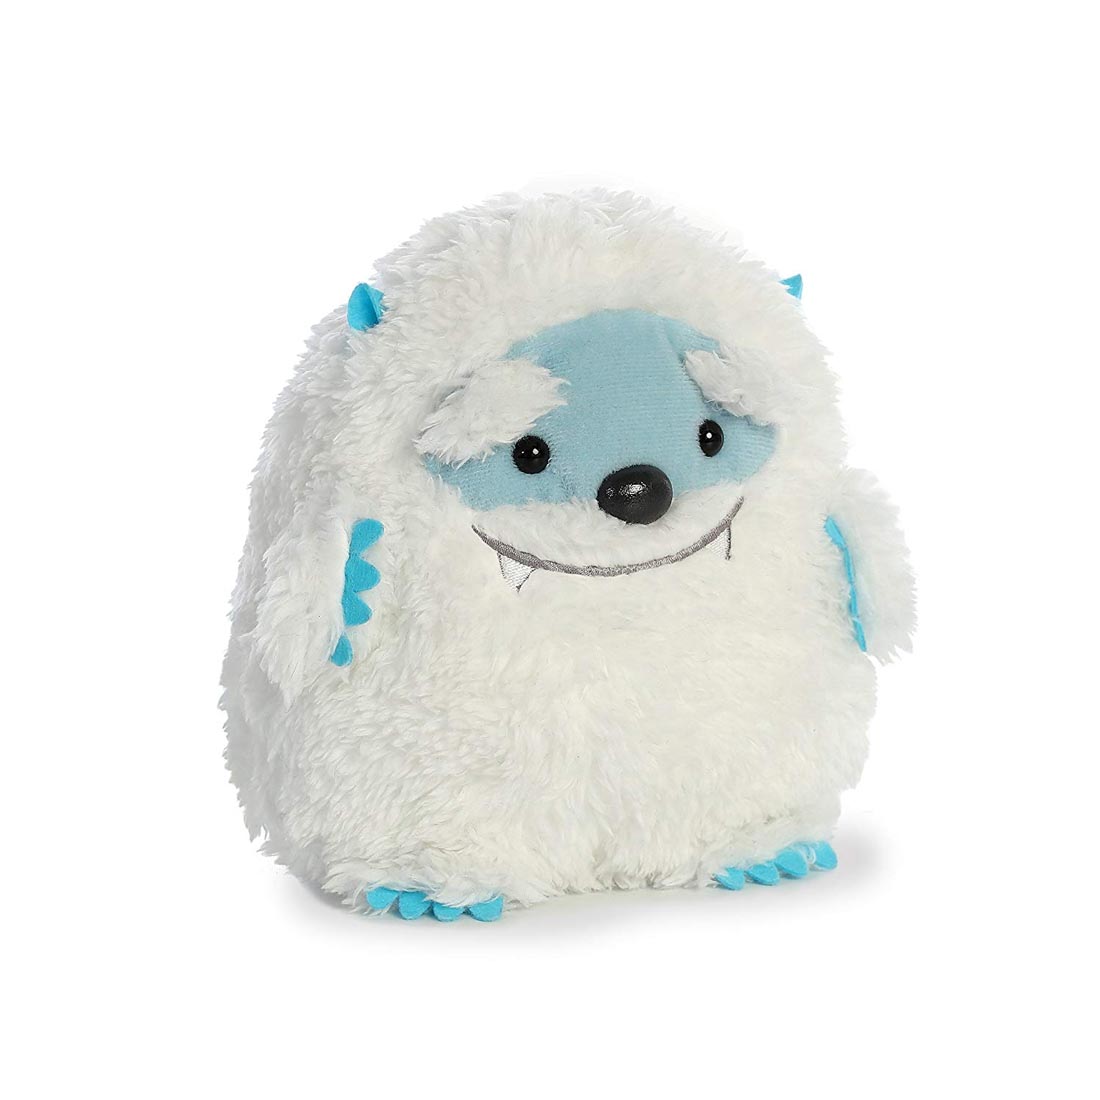 yeti stuffed animal